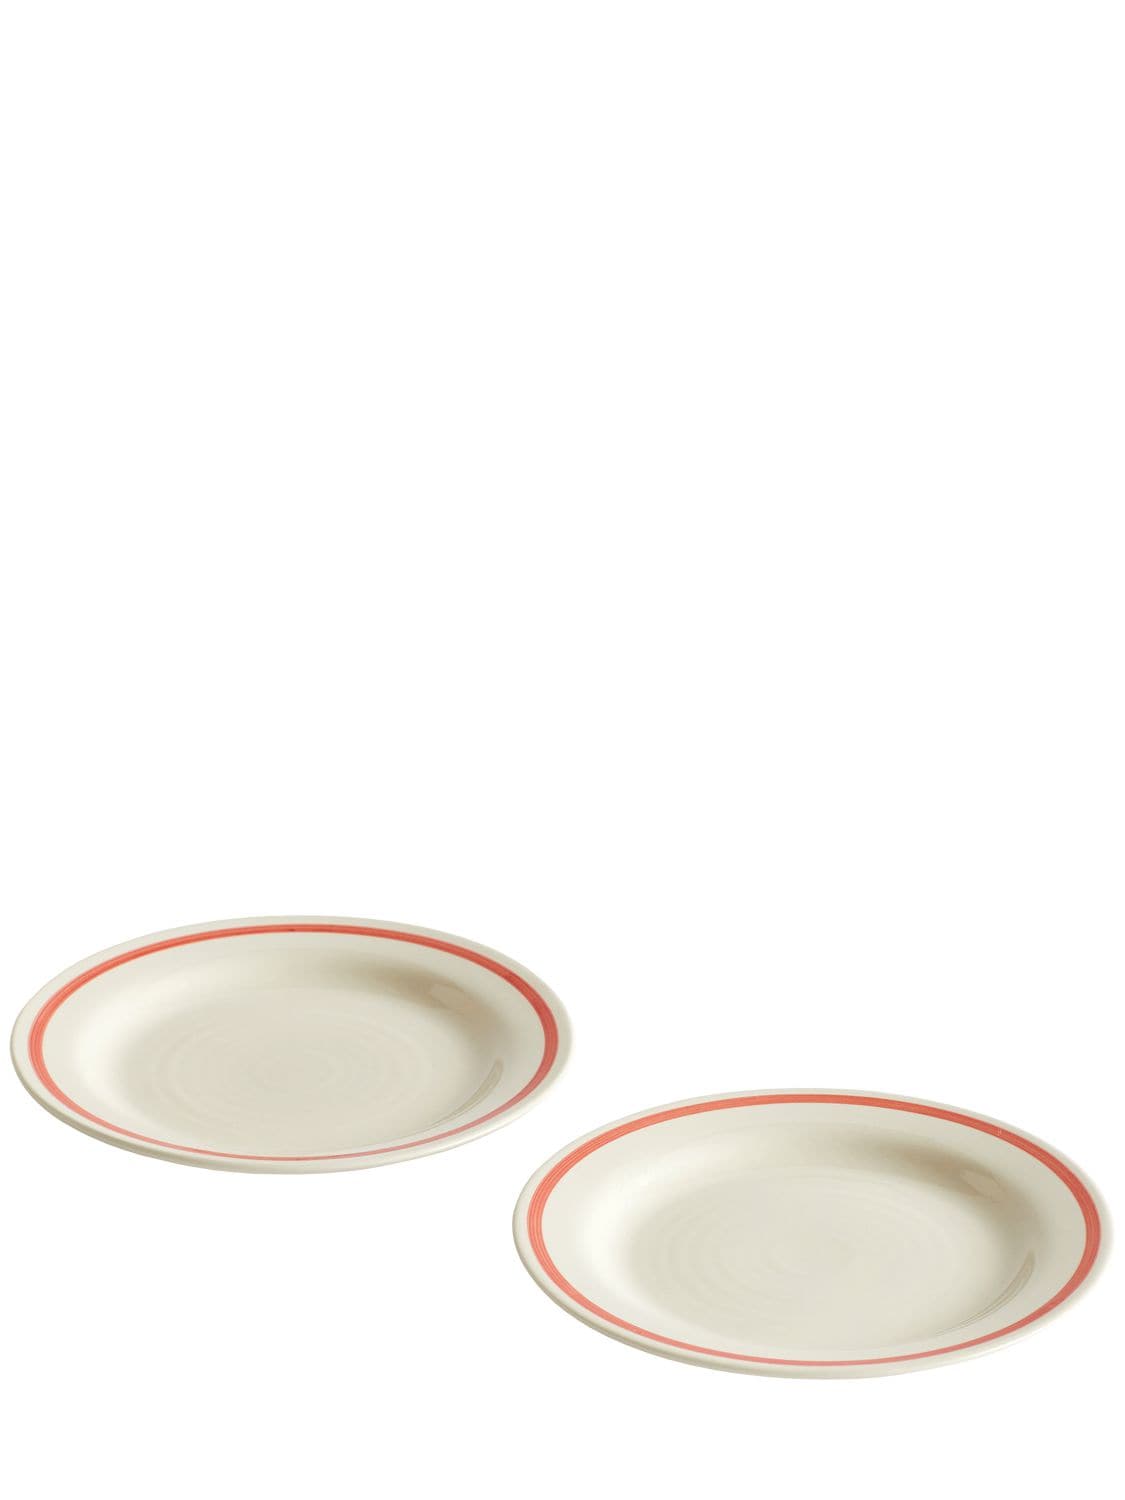 Hay Set Of 2 Sobremesa Plates In White